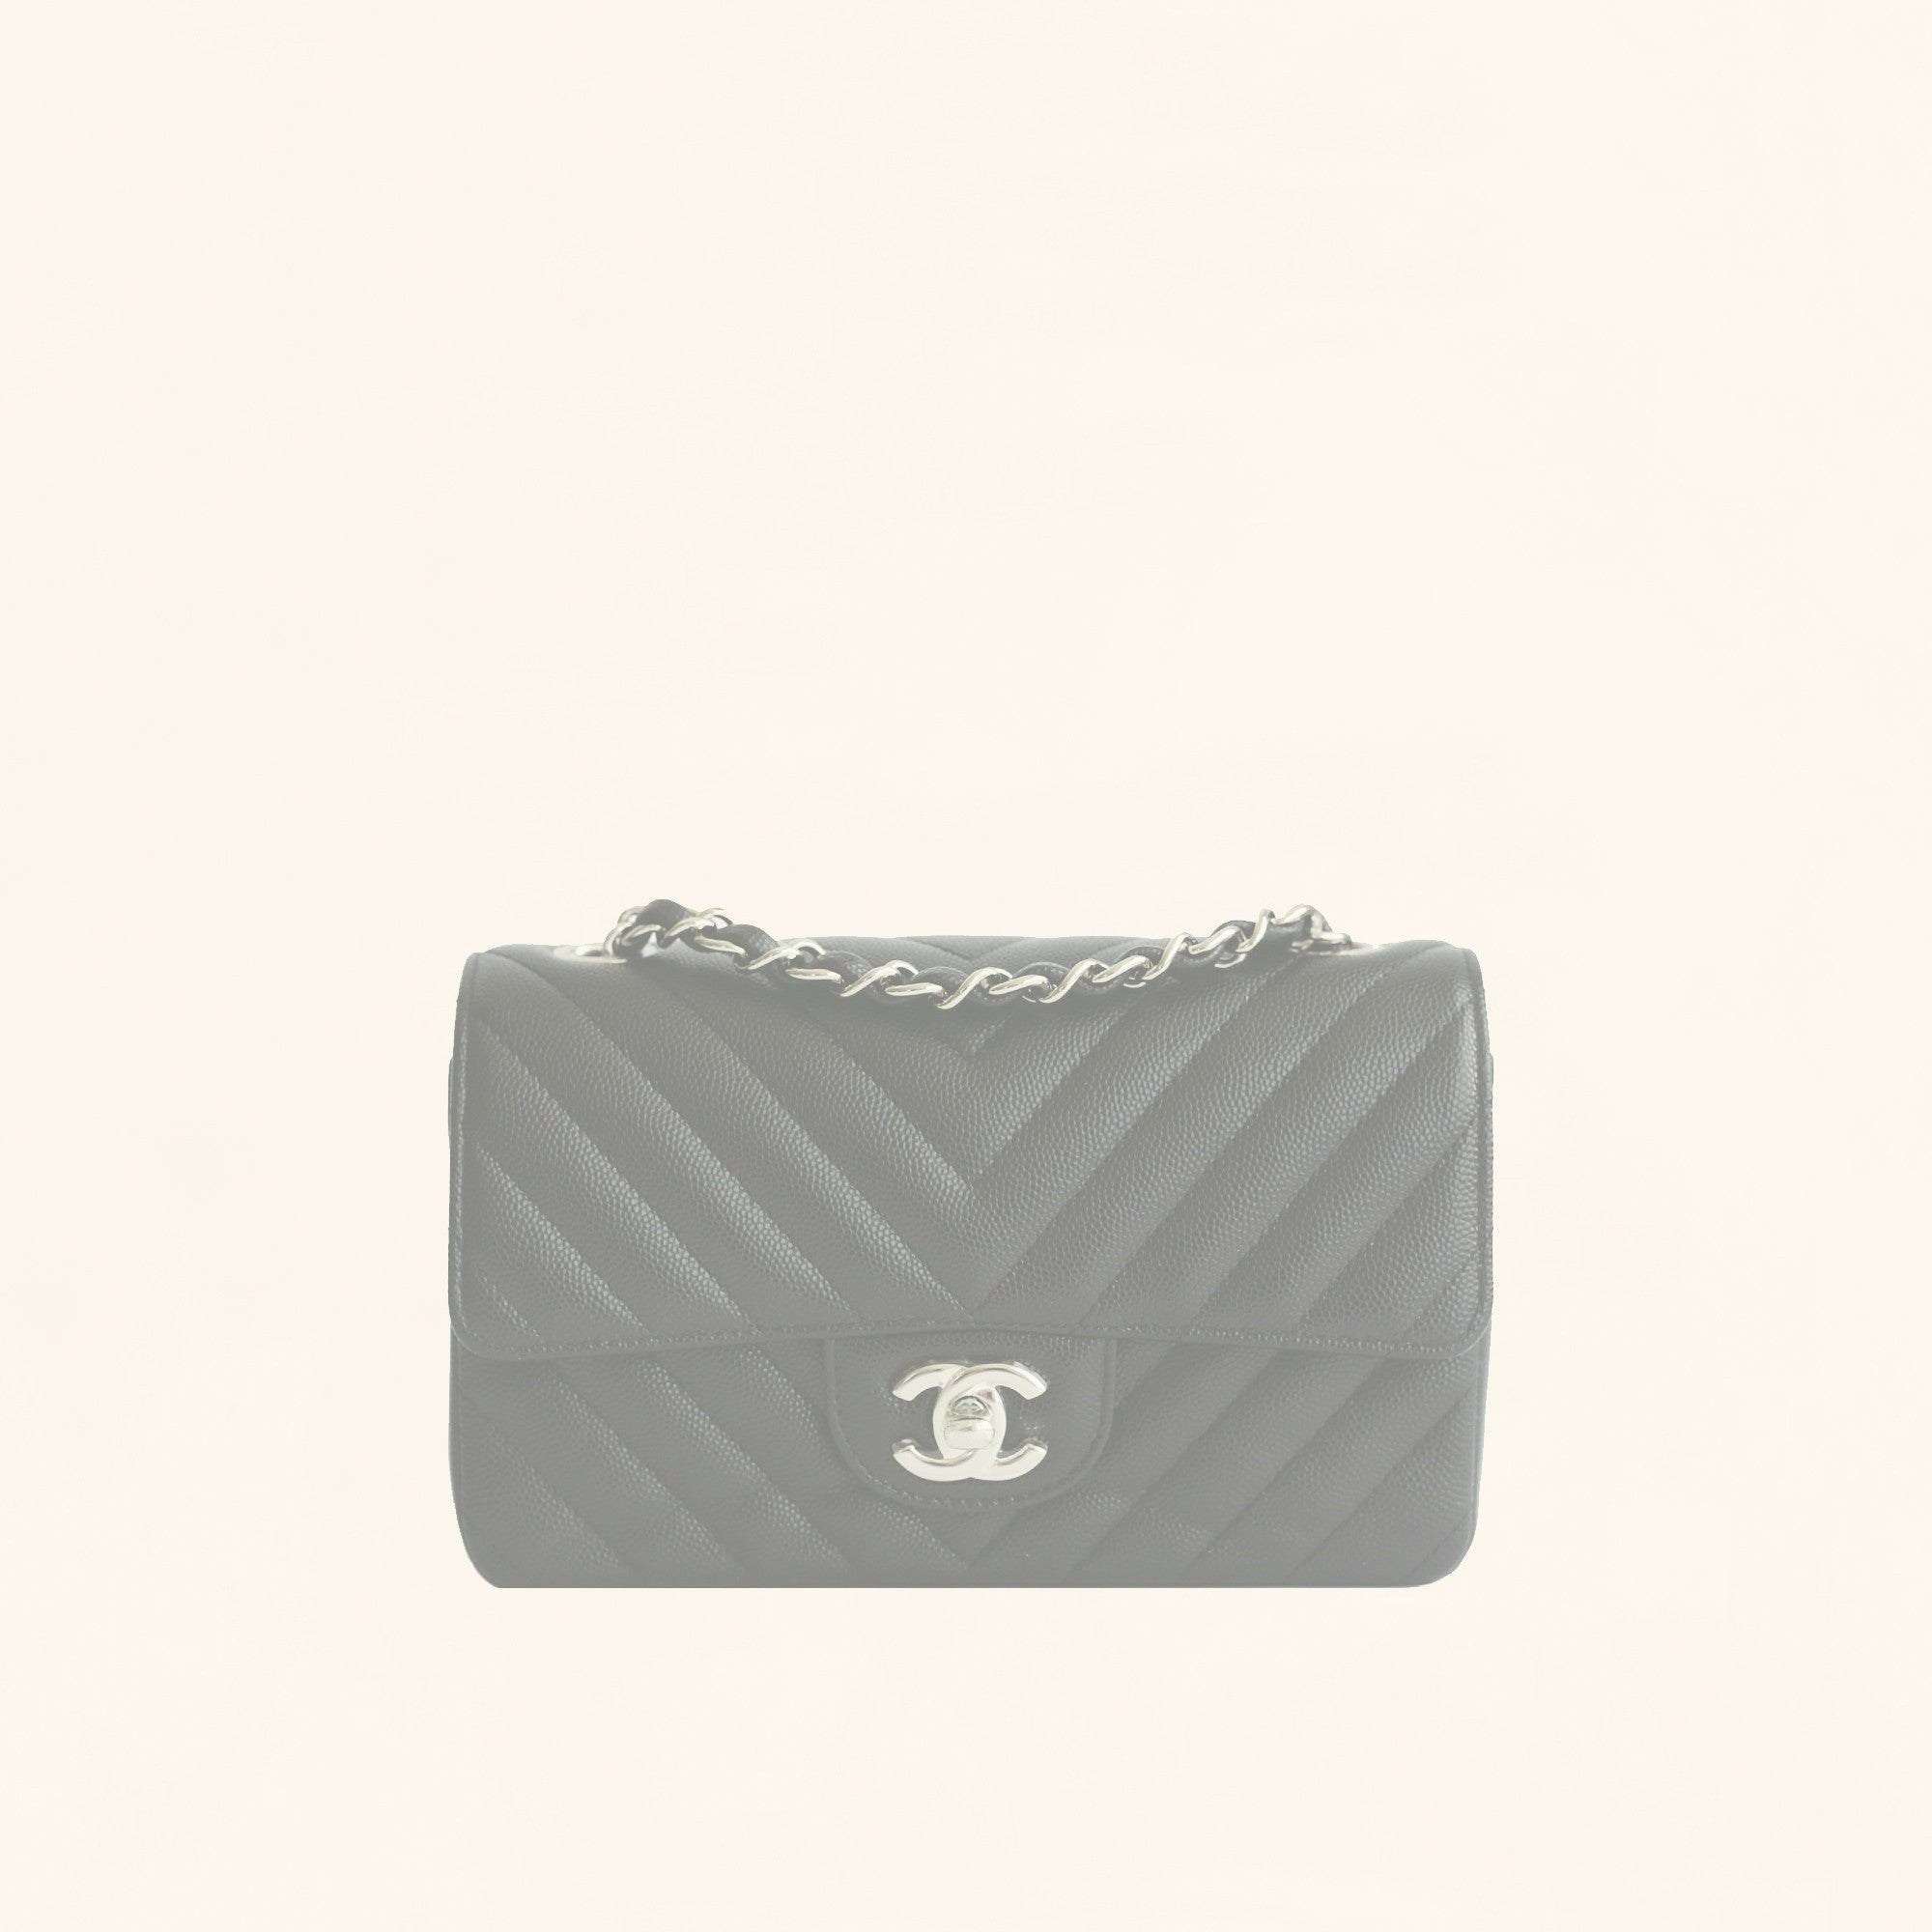 rectangular chanel mini flap bag